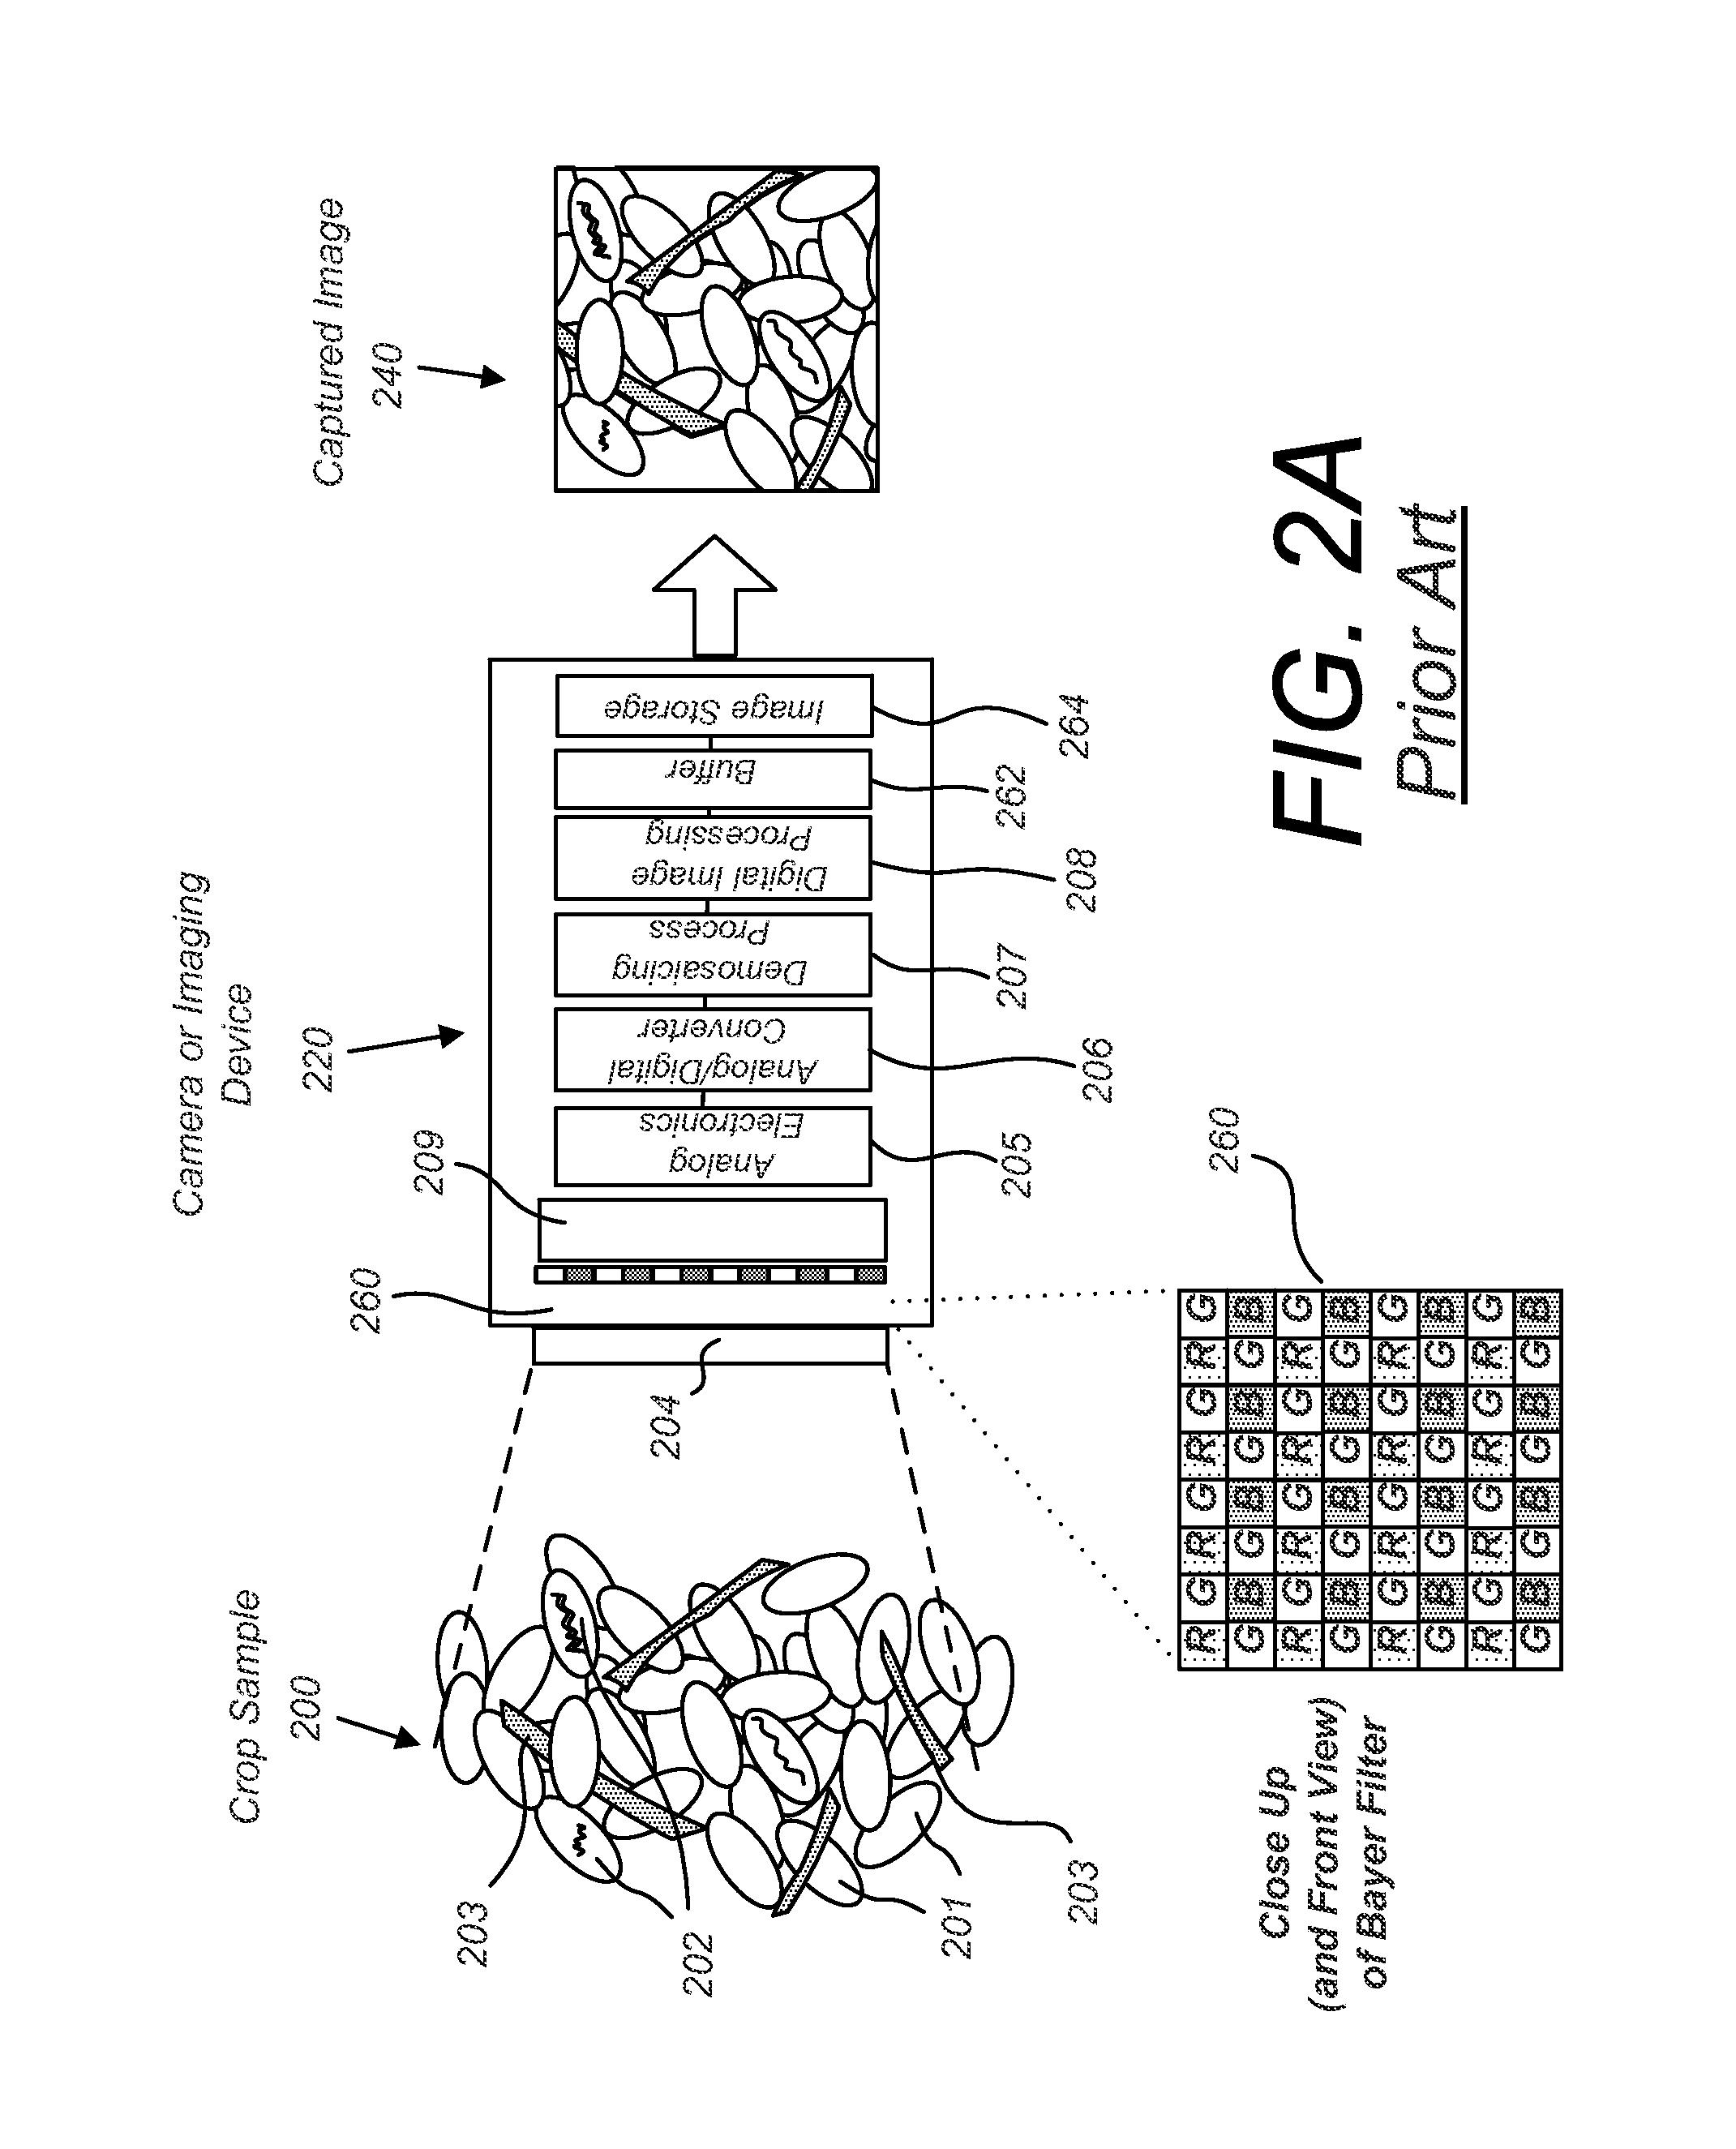 Acoustic material flow sensor